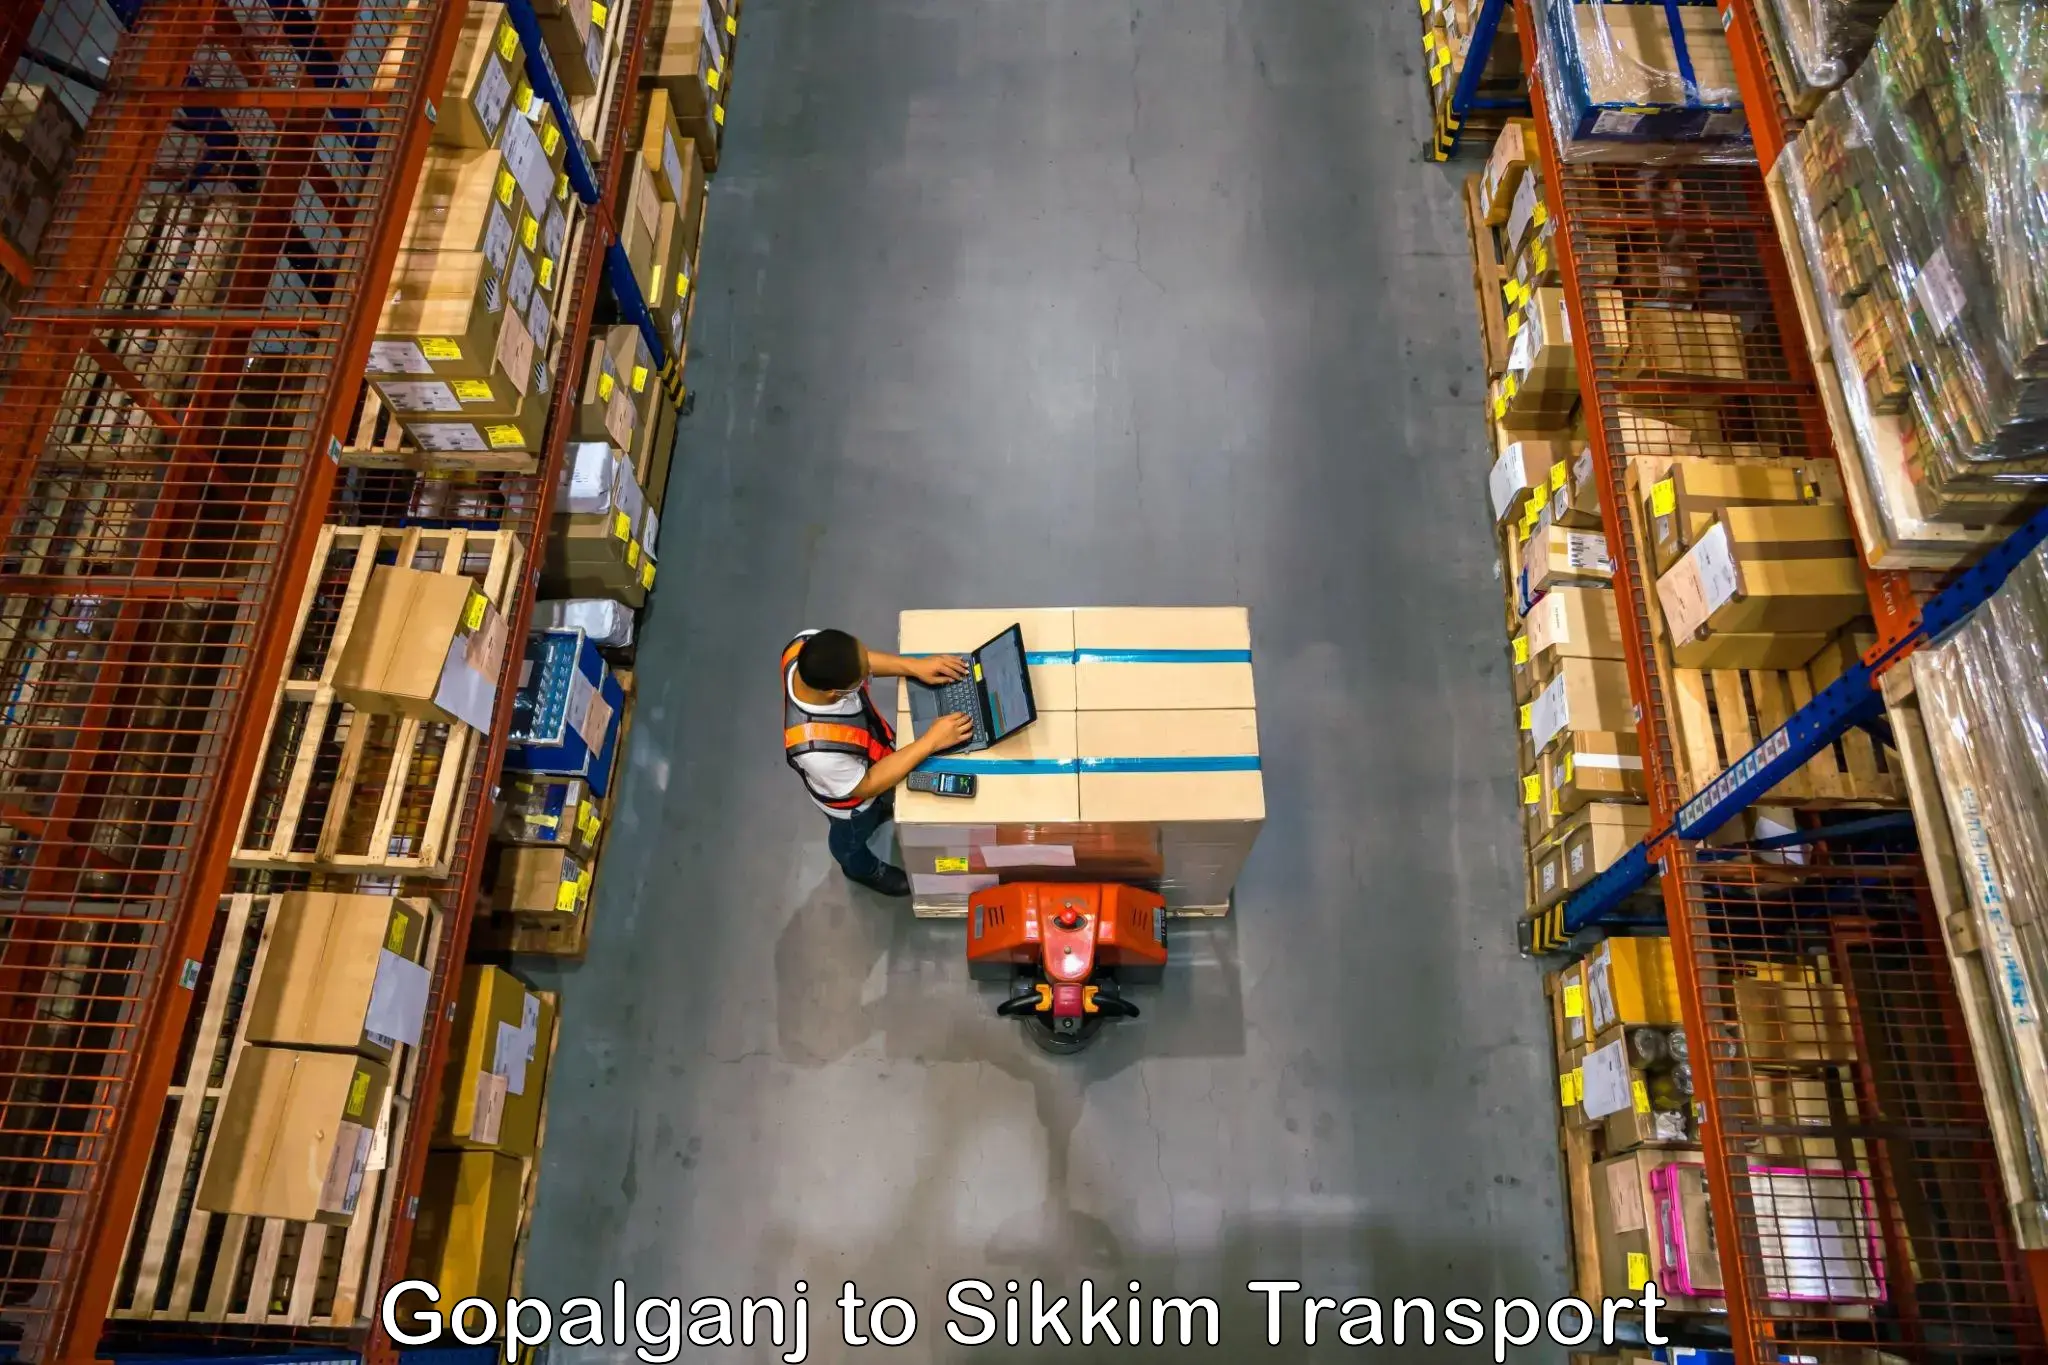 Delivery service Gopalganj to East Sikkim